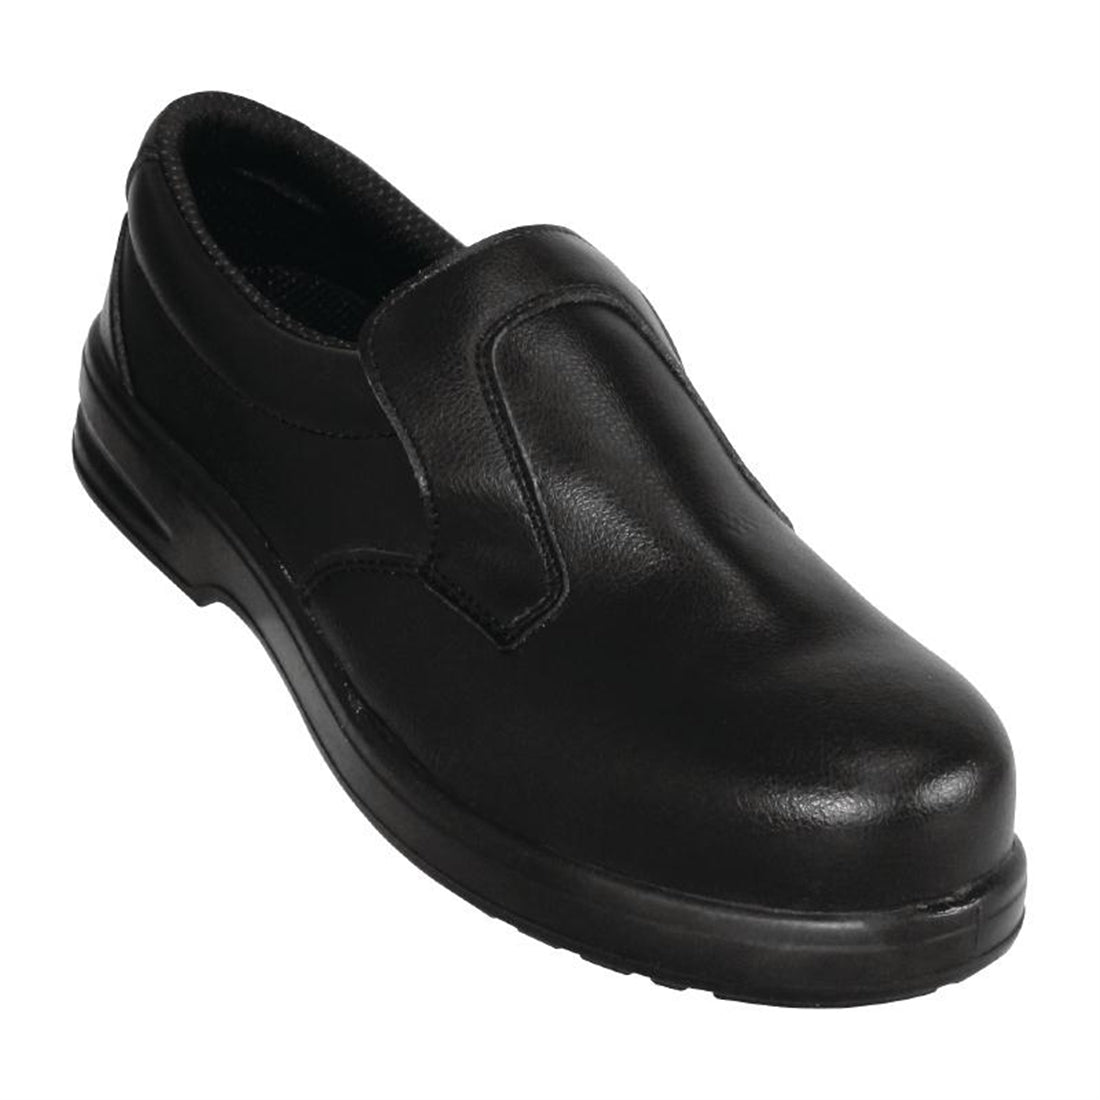 Slipbuster Lite Slip On Safety Shoes Black 47